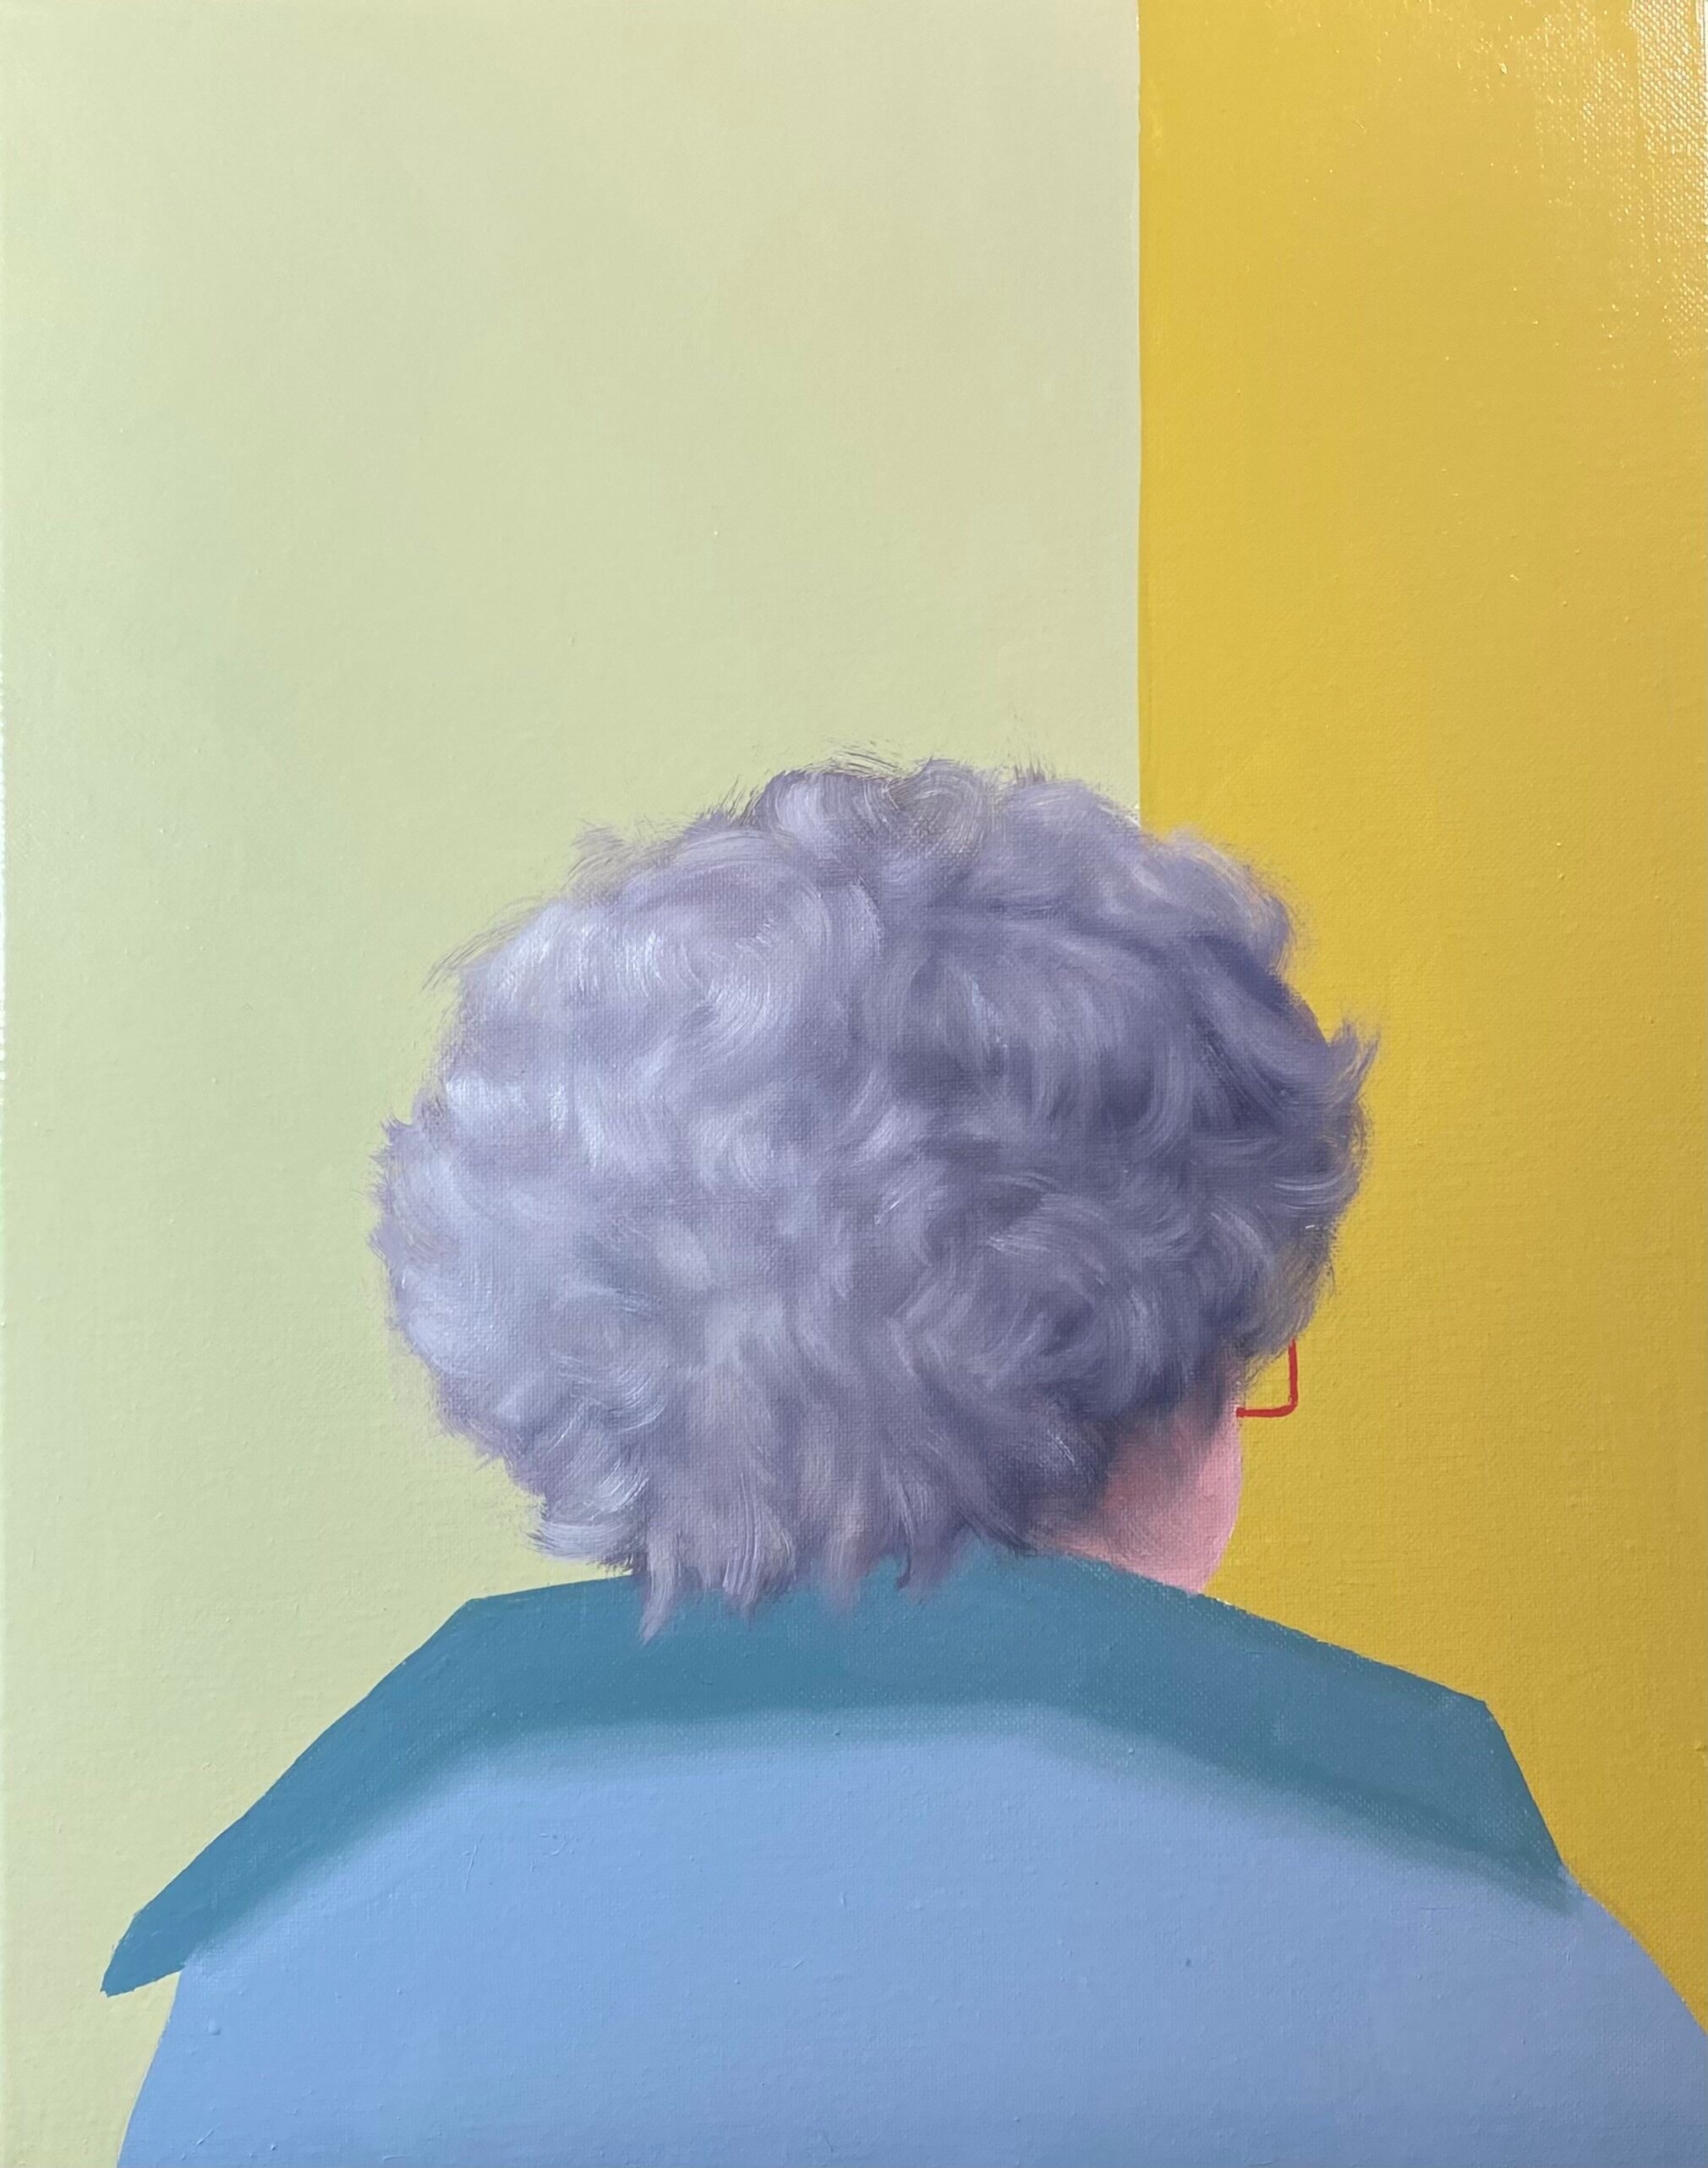 “Grandmas third eye" 14x18” oil on canvas 2021